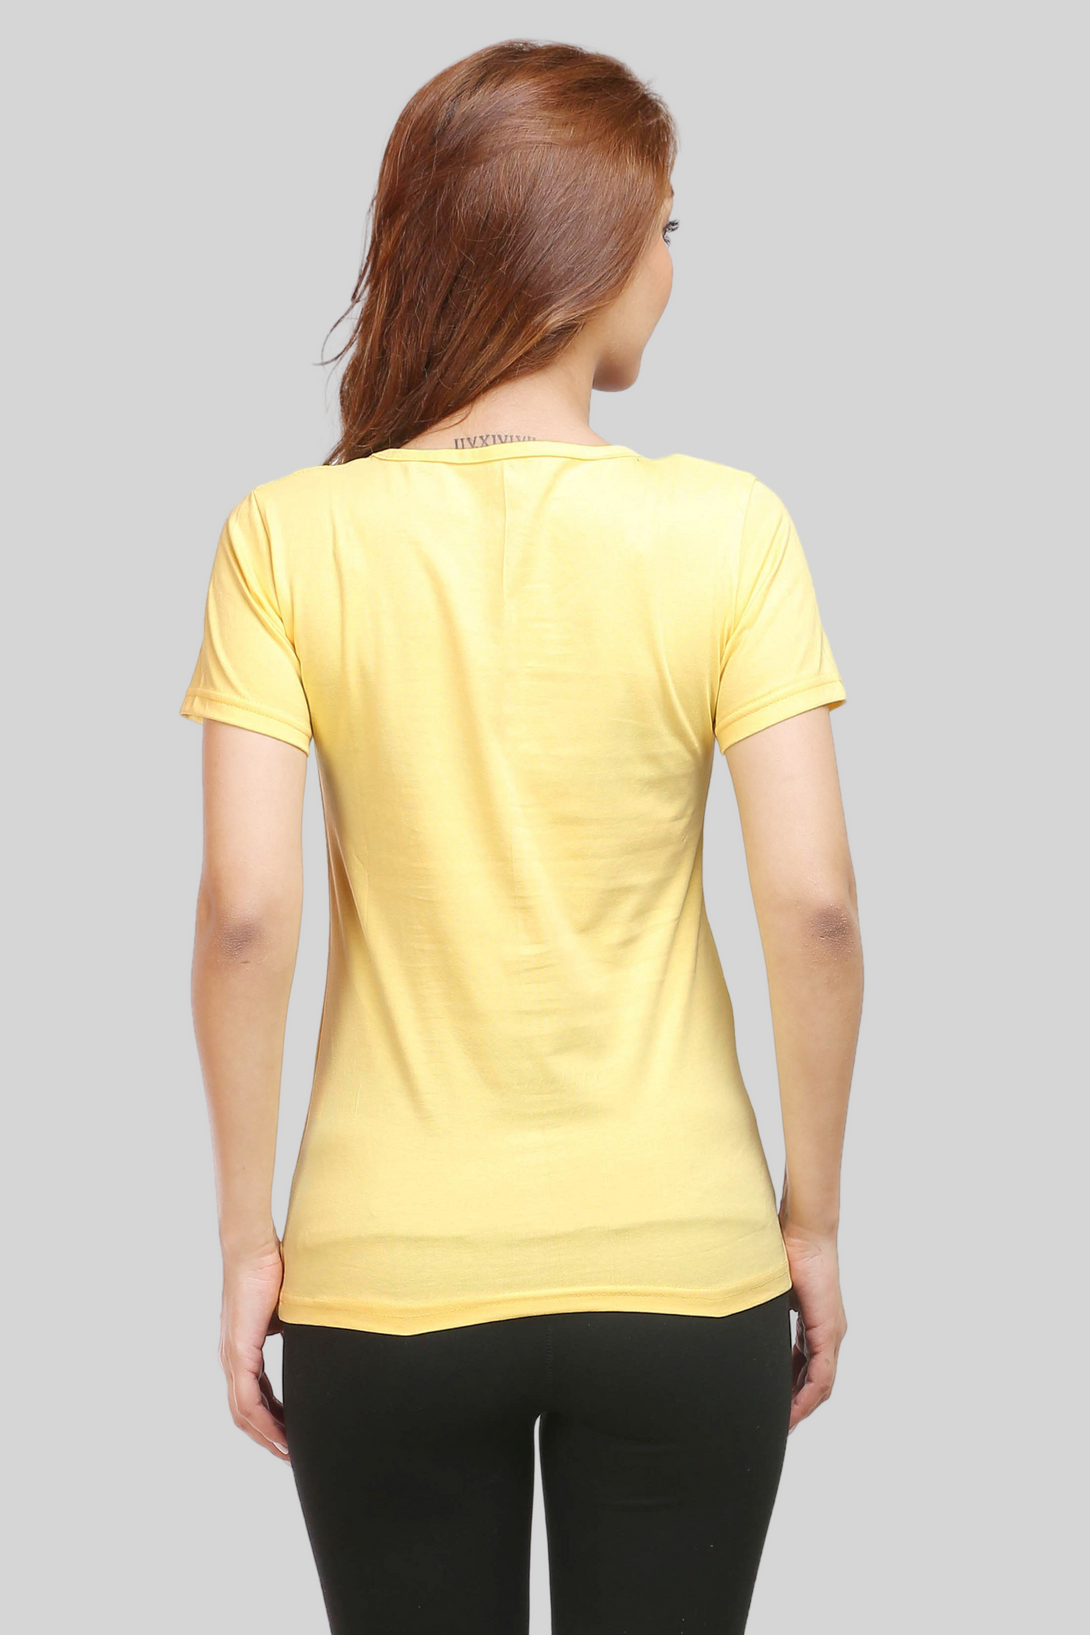 Yellow Scoop Neck T-Shirt For Women - WowWaves - 5